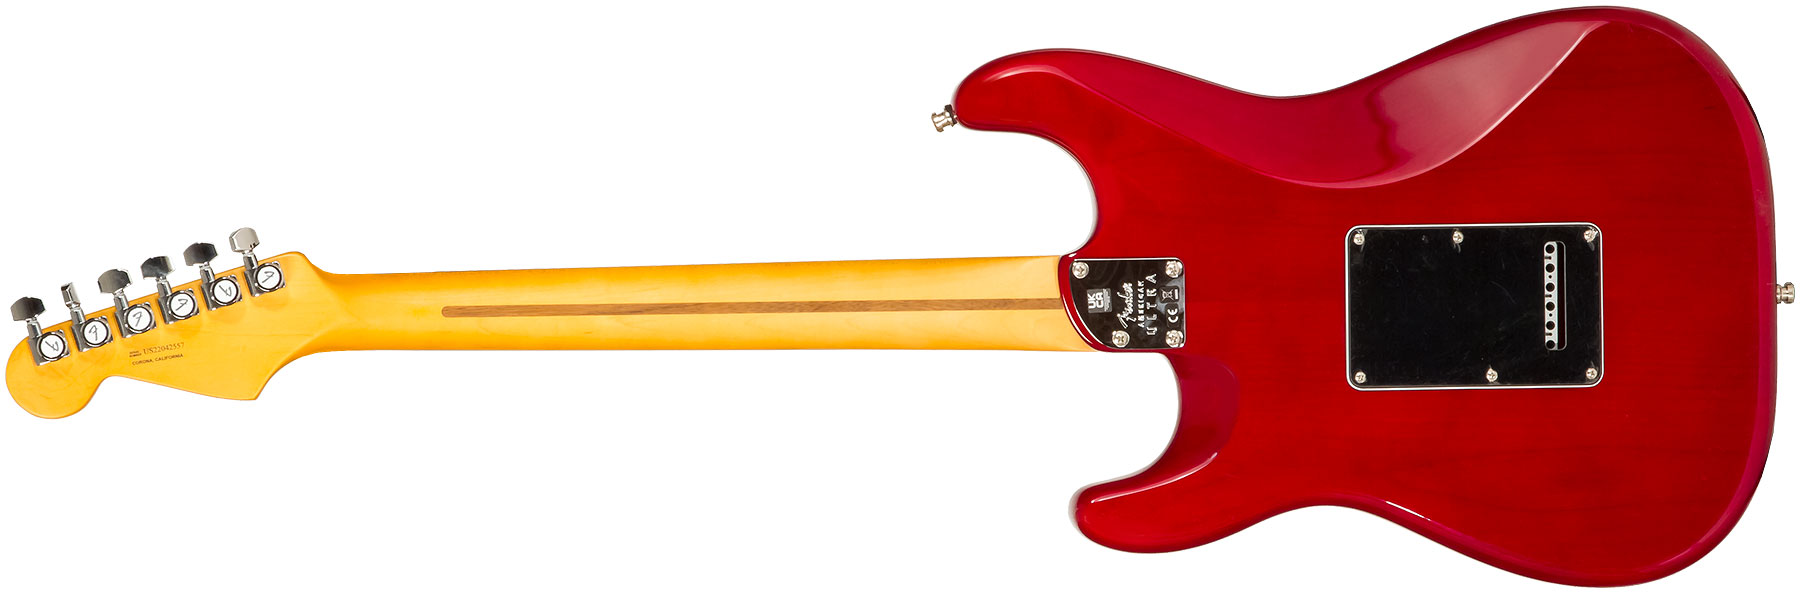 Fender Strat American Ultra Ltd Usa Hss Trem Eb - Umbra - Str shape electric guitar - Variation 1